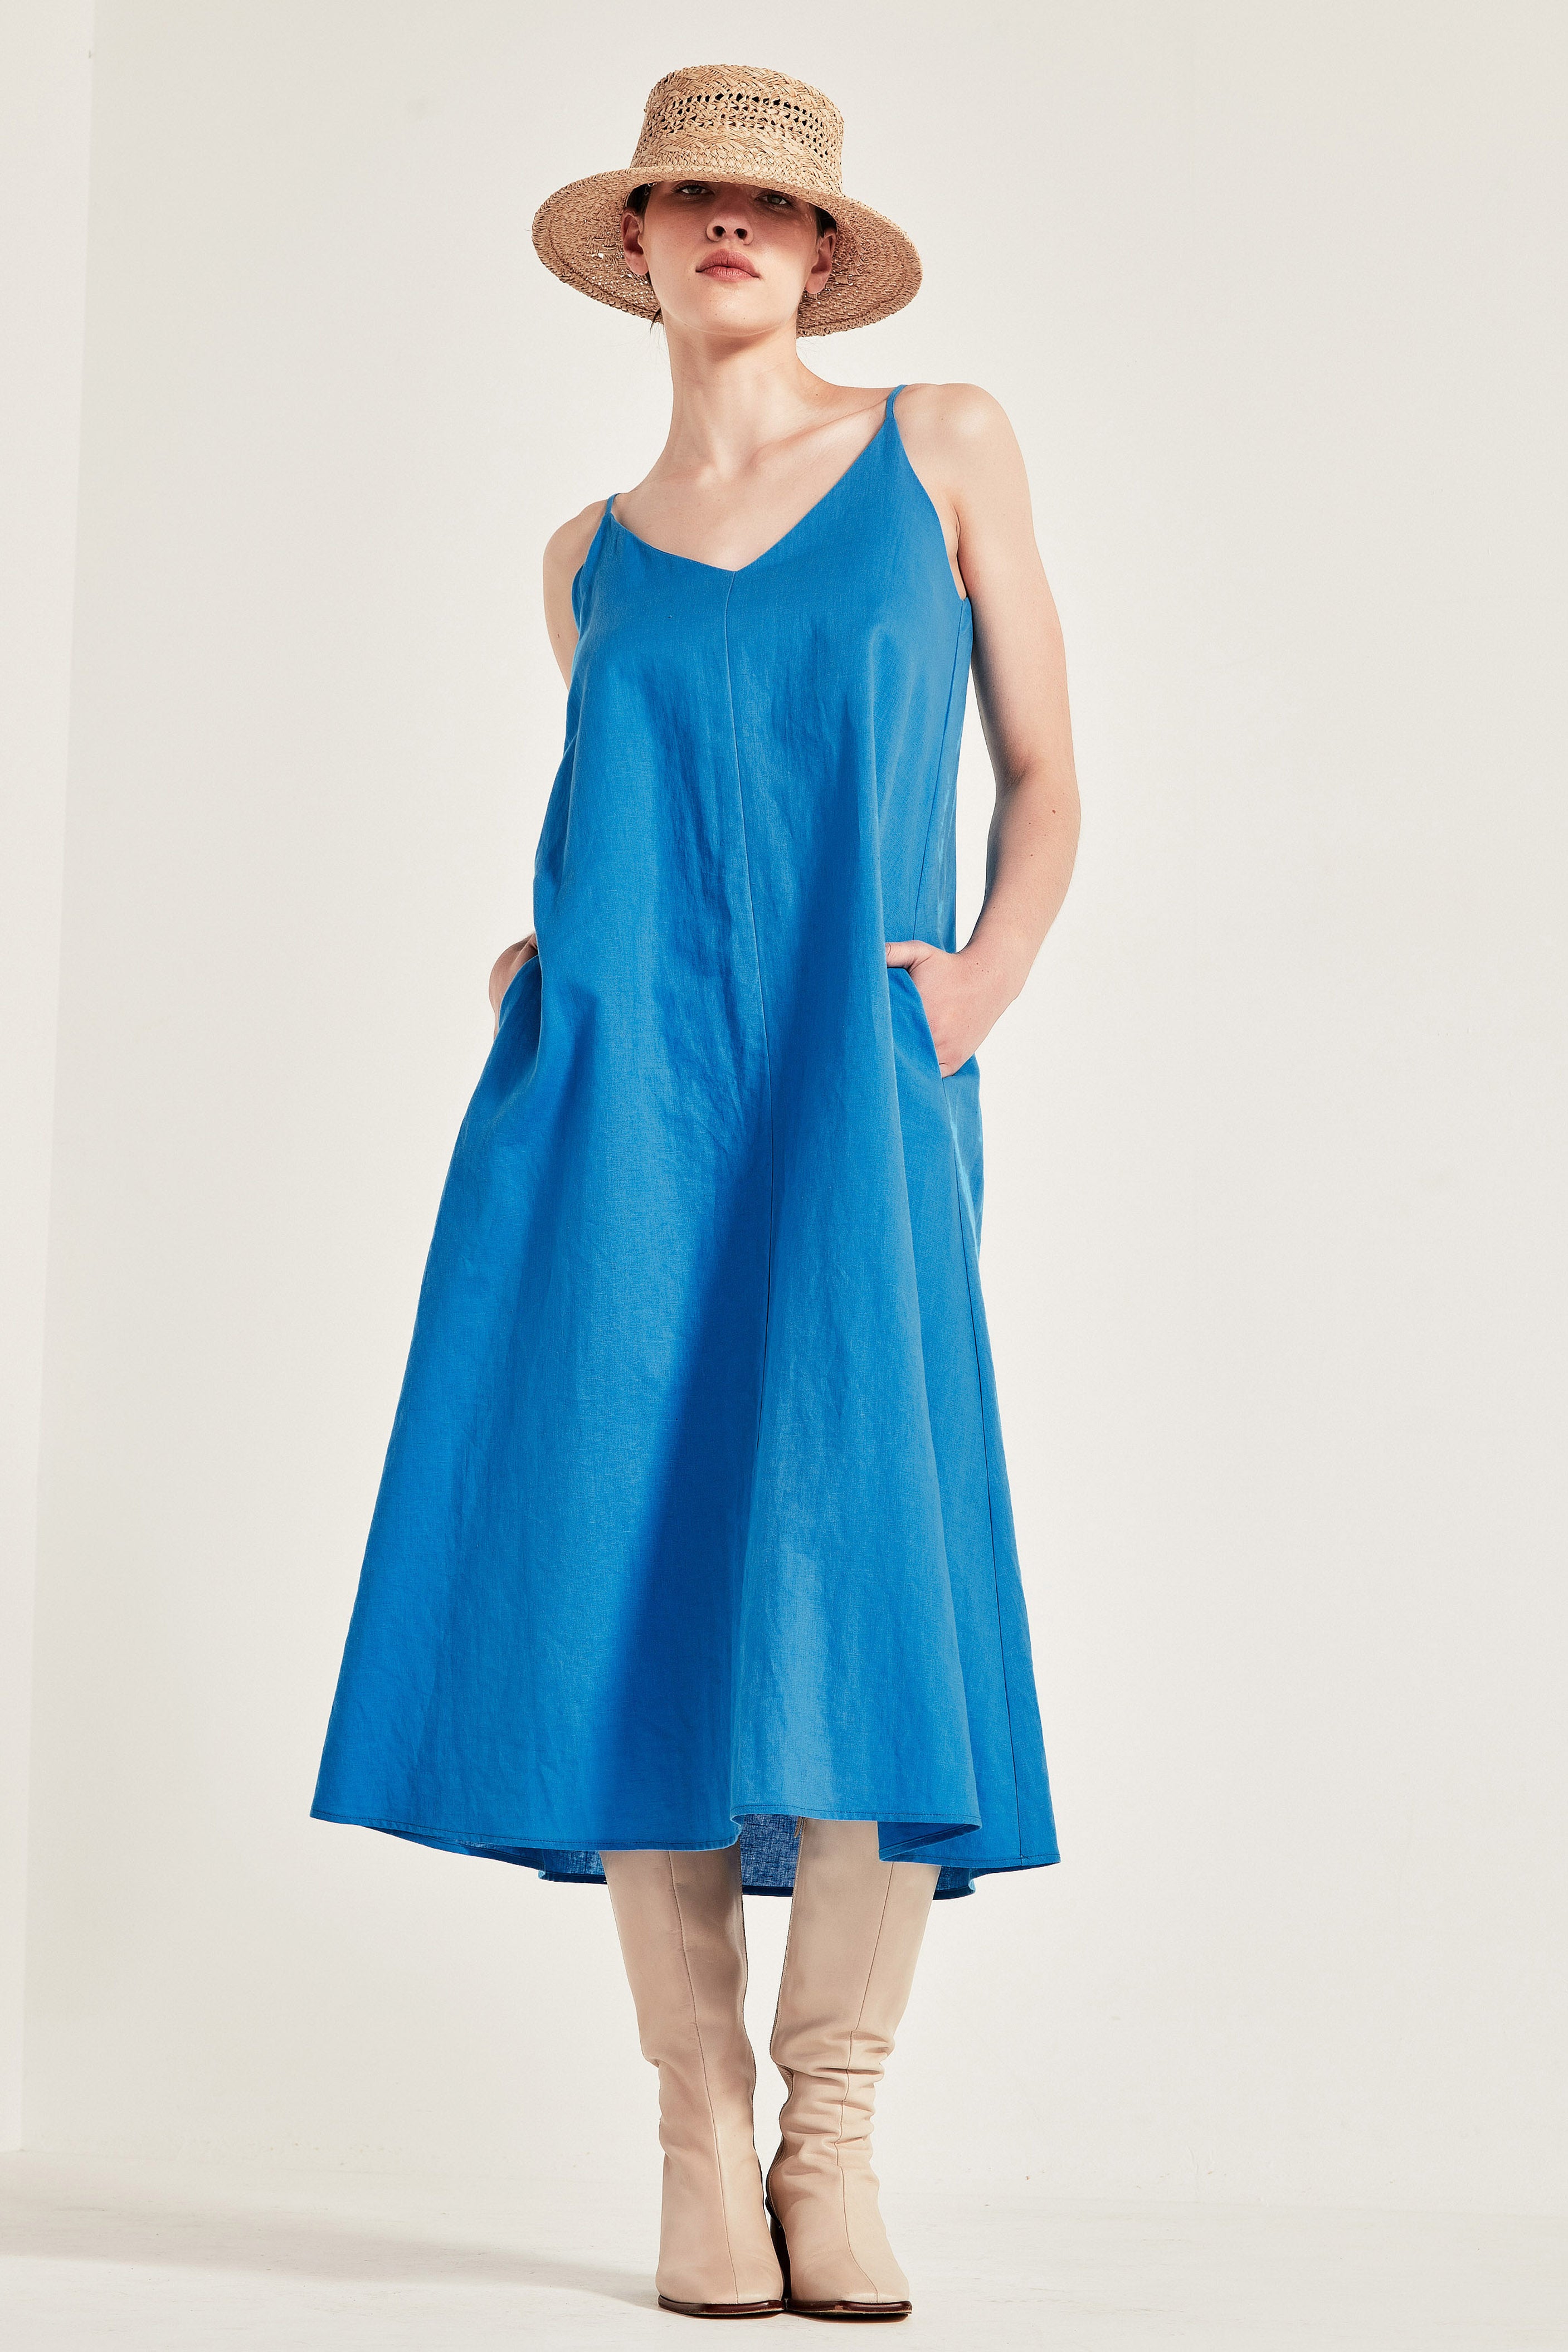 The Marnie 2-Way Sun Dress in Azure